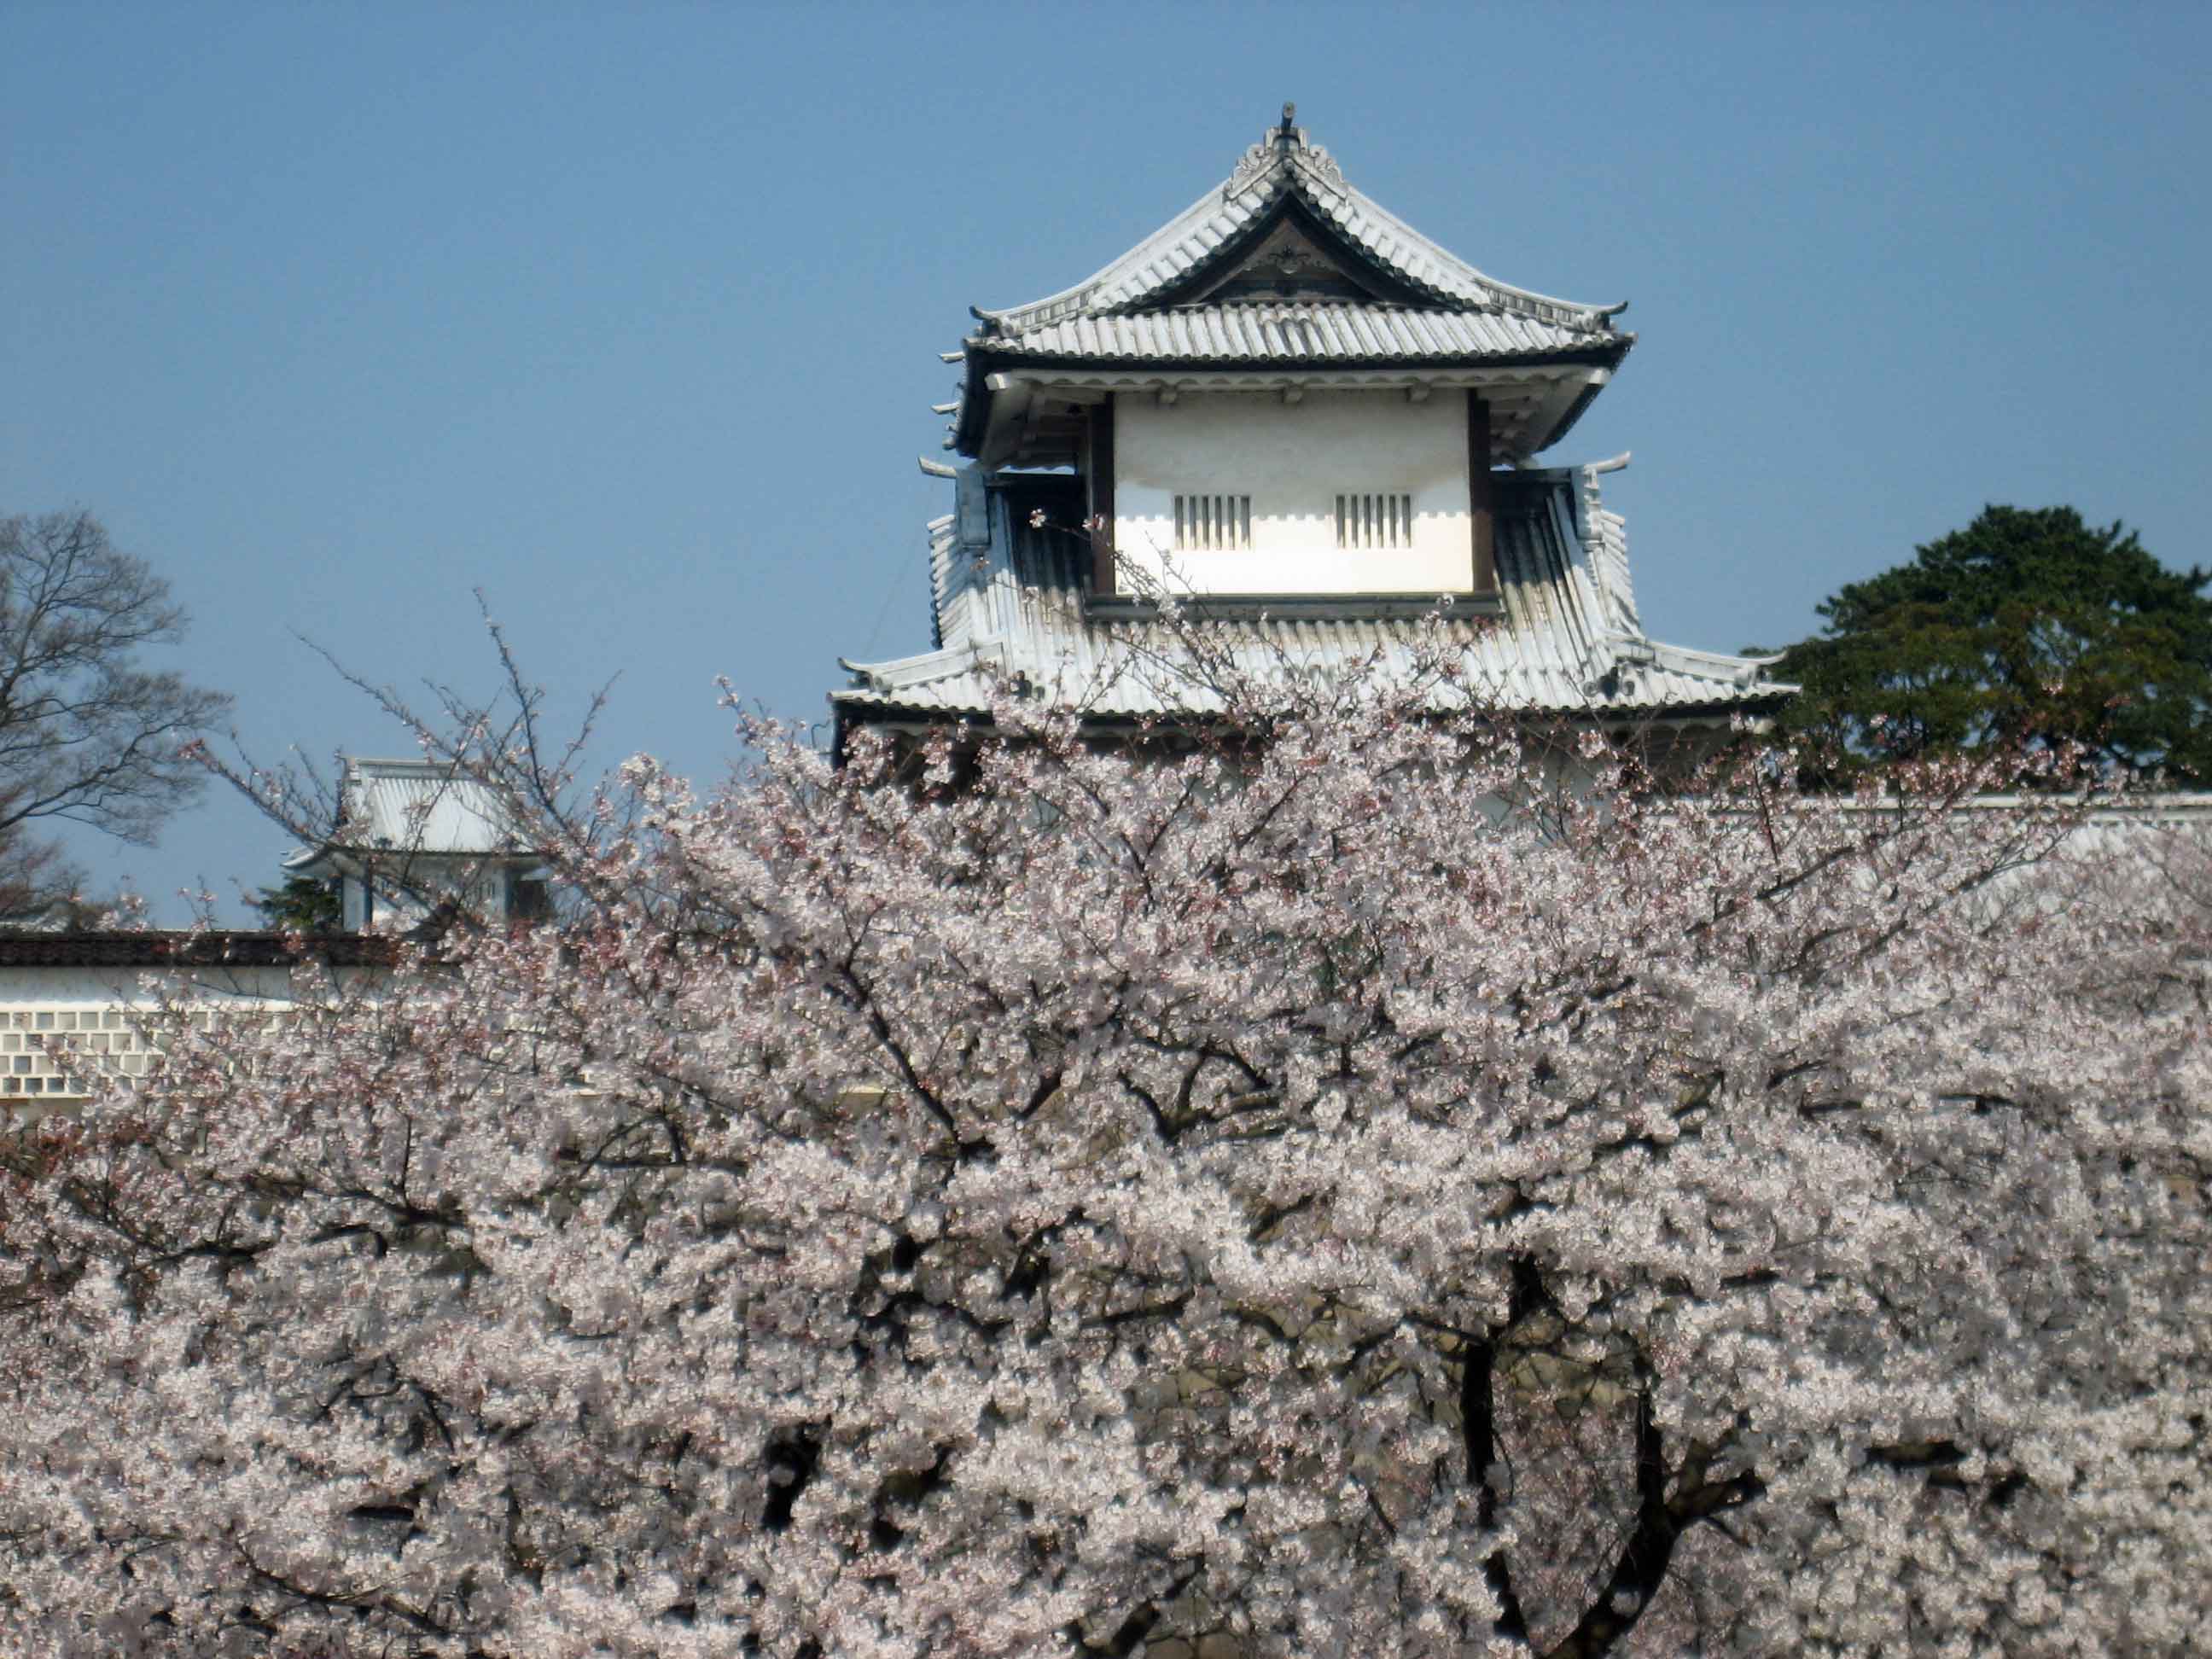 Amazing display of cherry blossom flowers outside Kanazawa Castle Park.